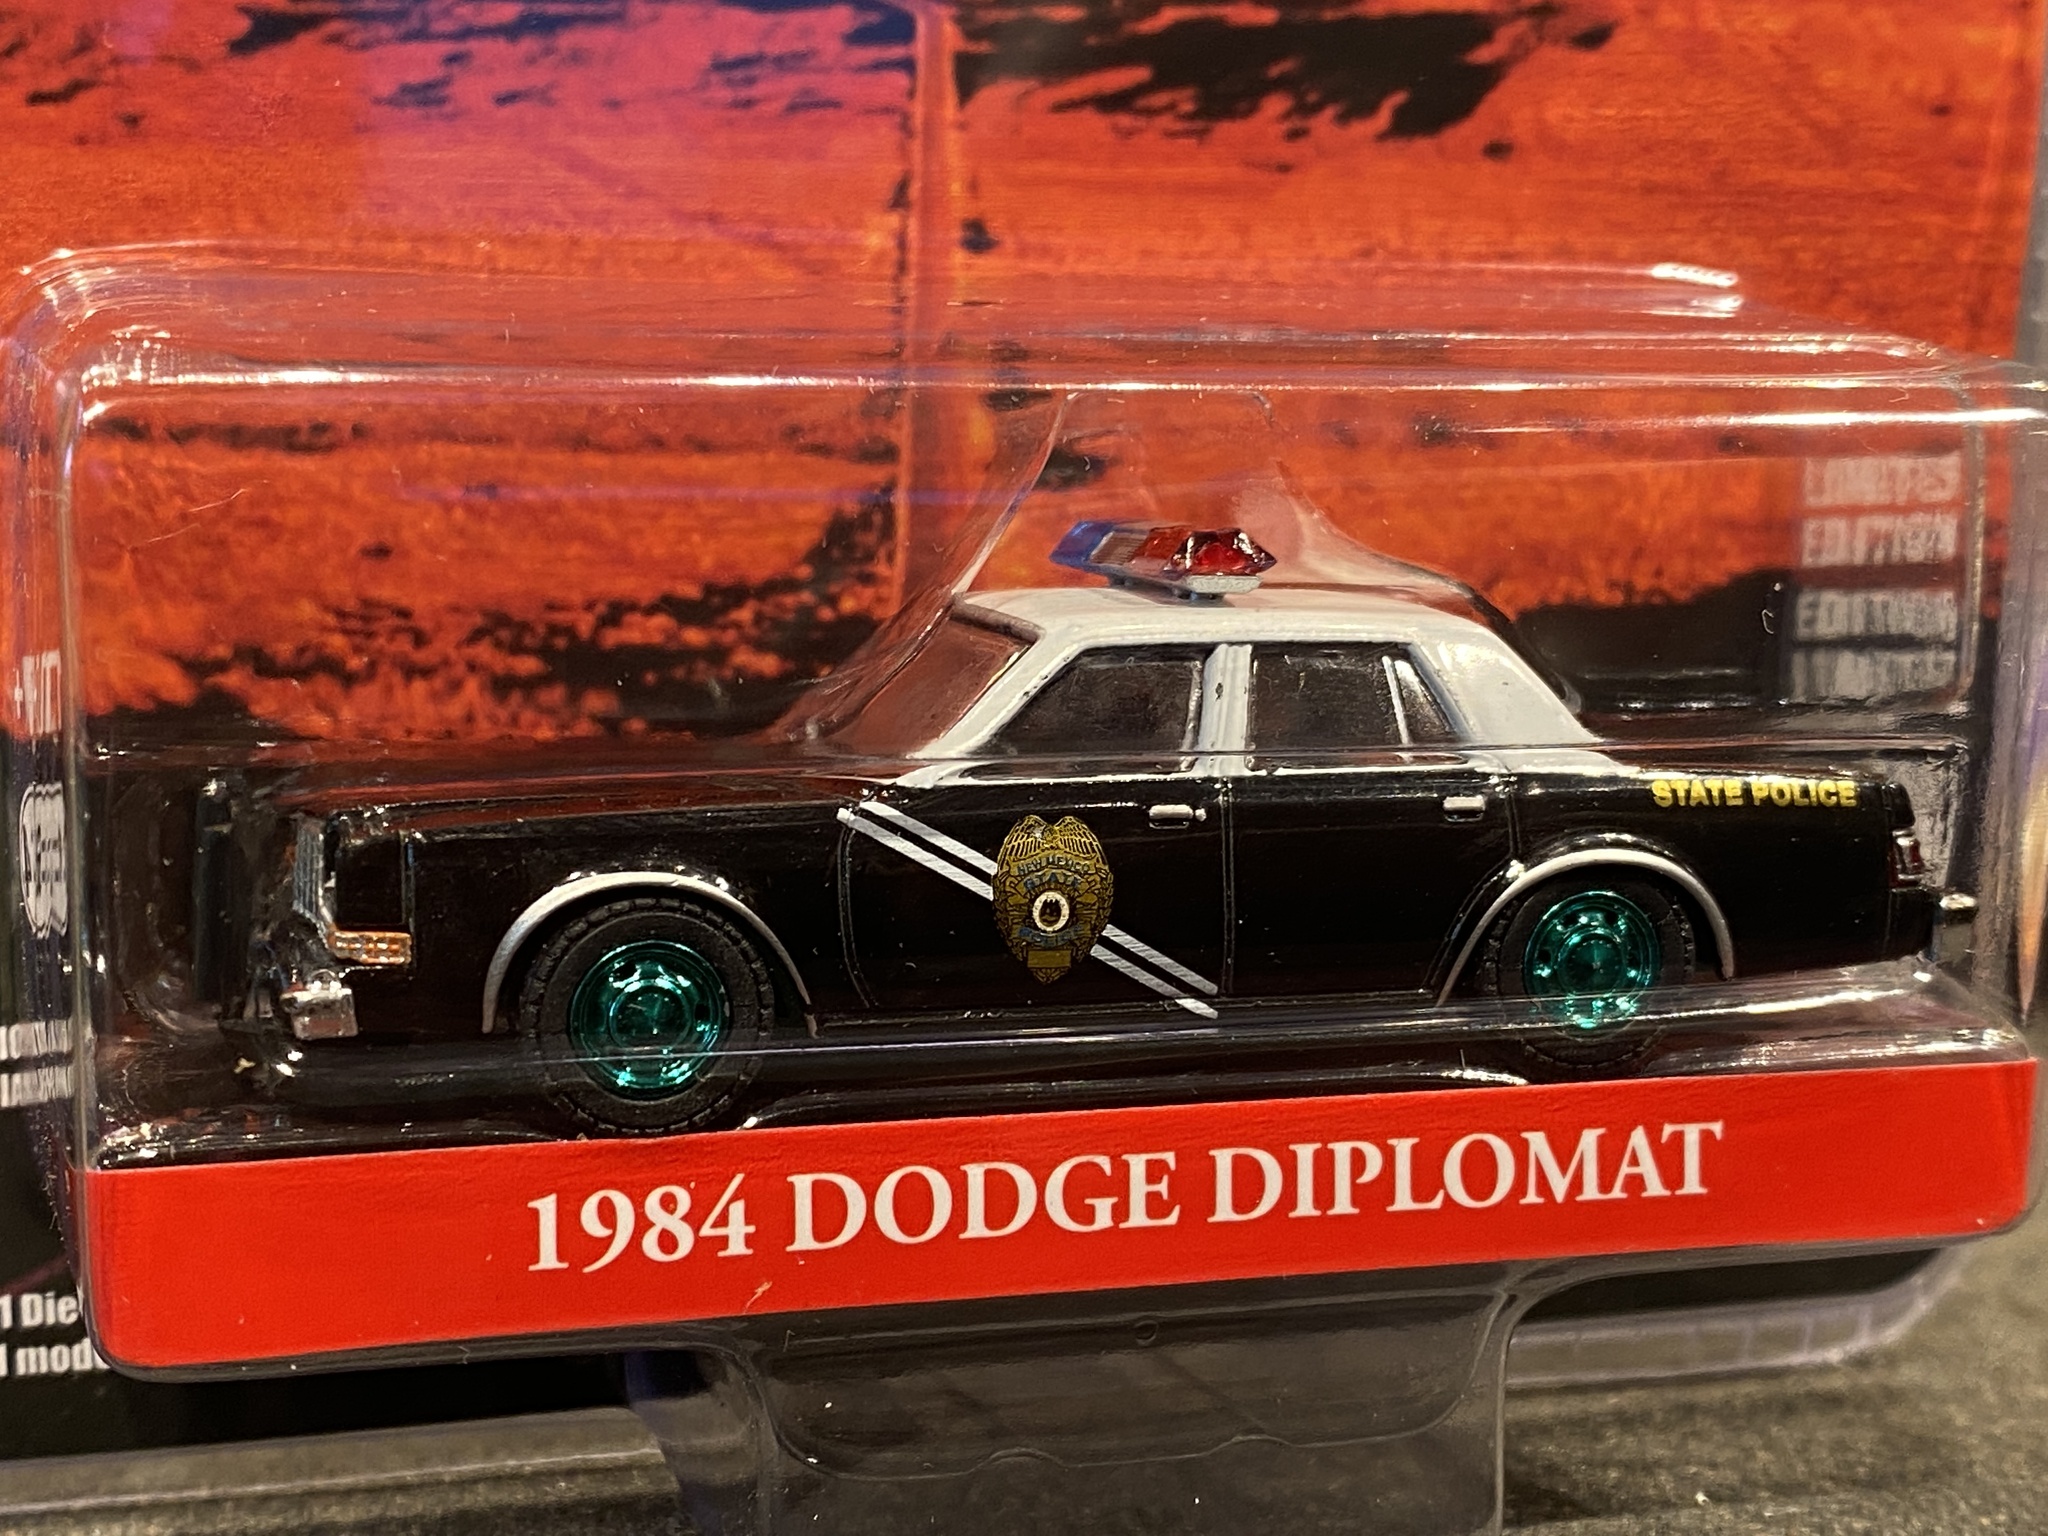 Skala 1/64 Dodge Diplomat 84' Police "Thelma & Louise" fr Greenlight Green ed.